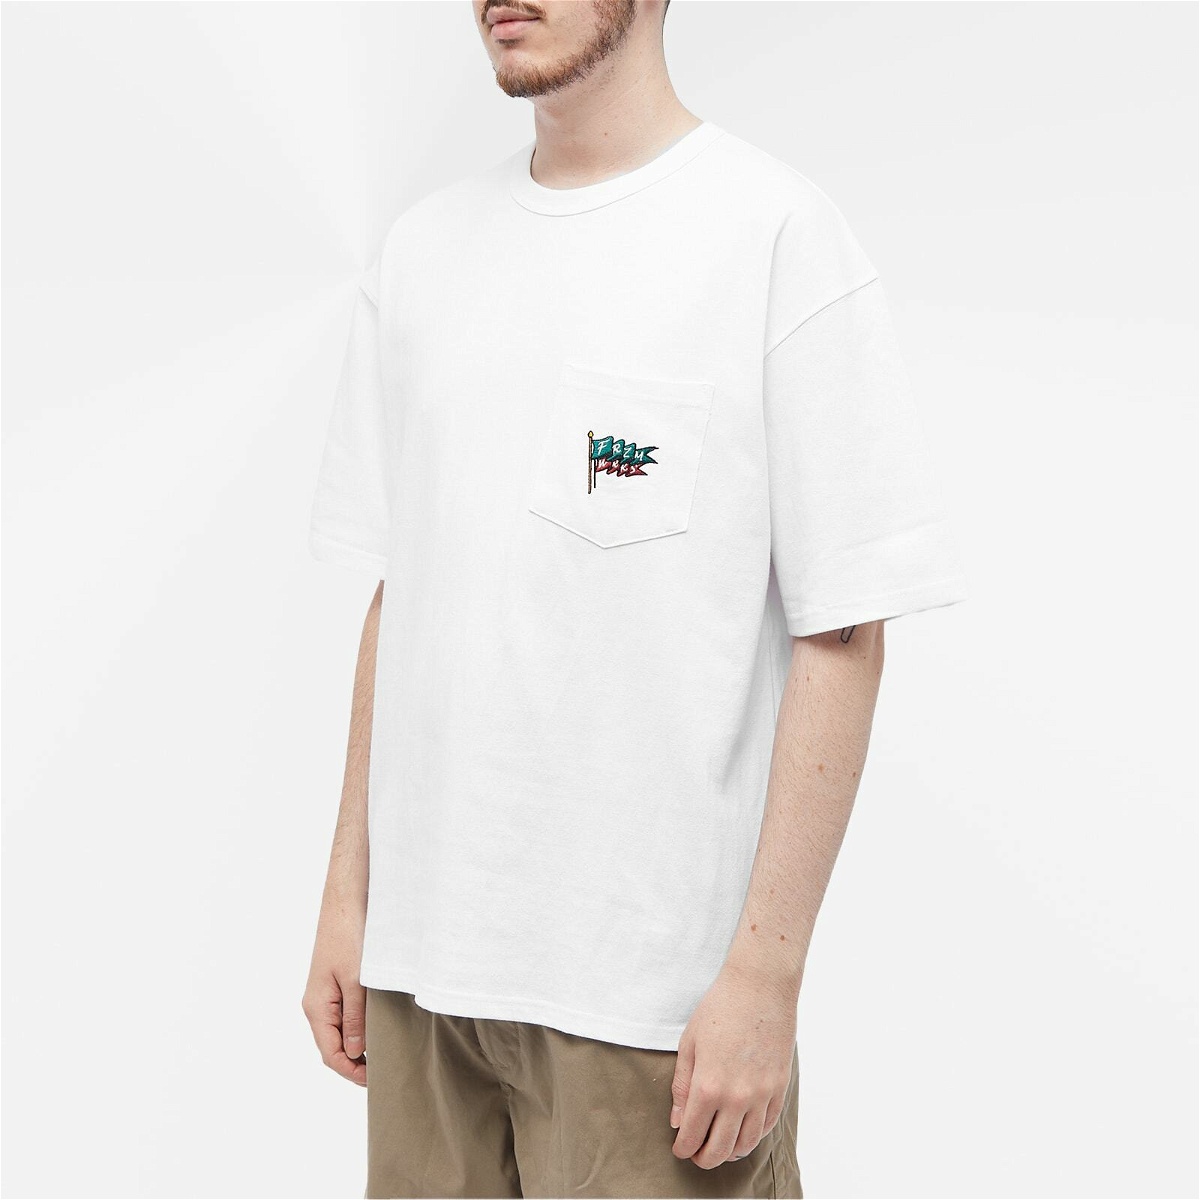 FrizmWORKS Men's Pennant Pocket T-Shirt in White FrizmWORKS